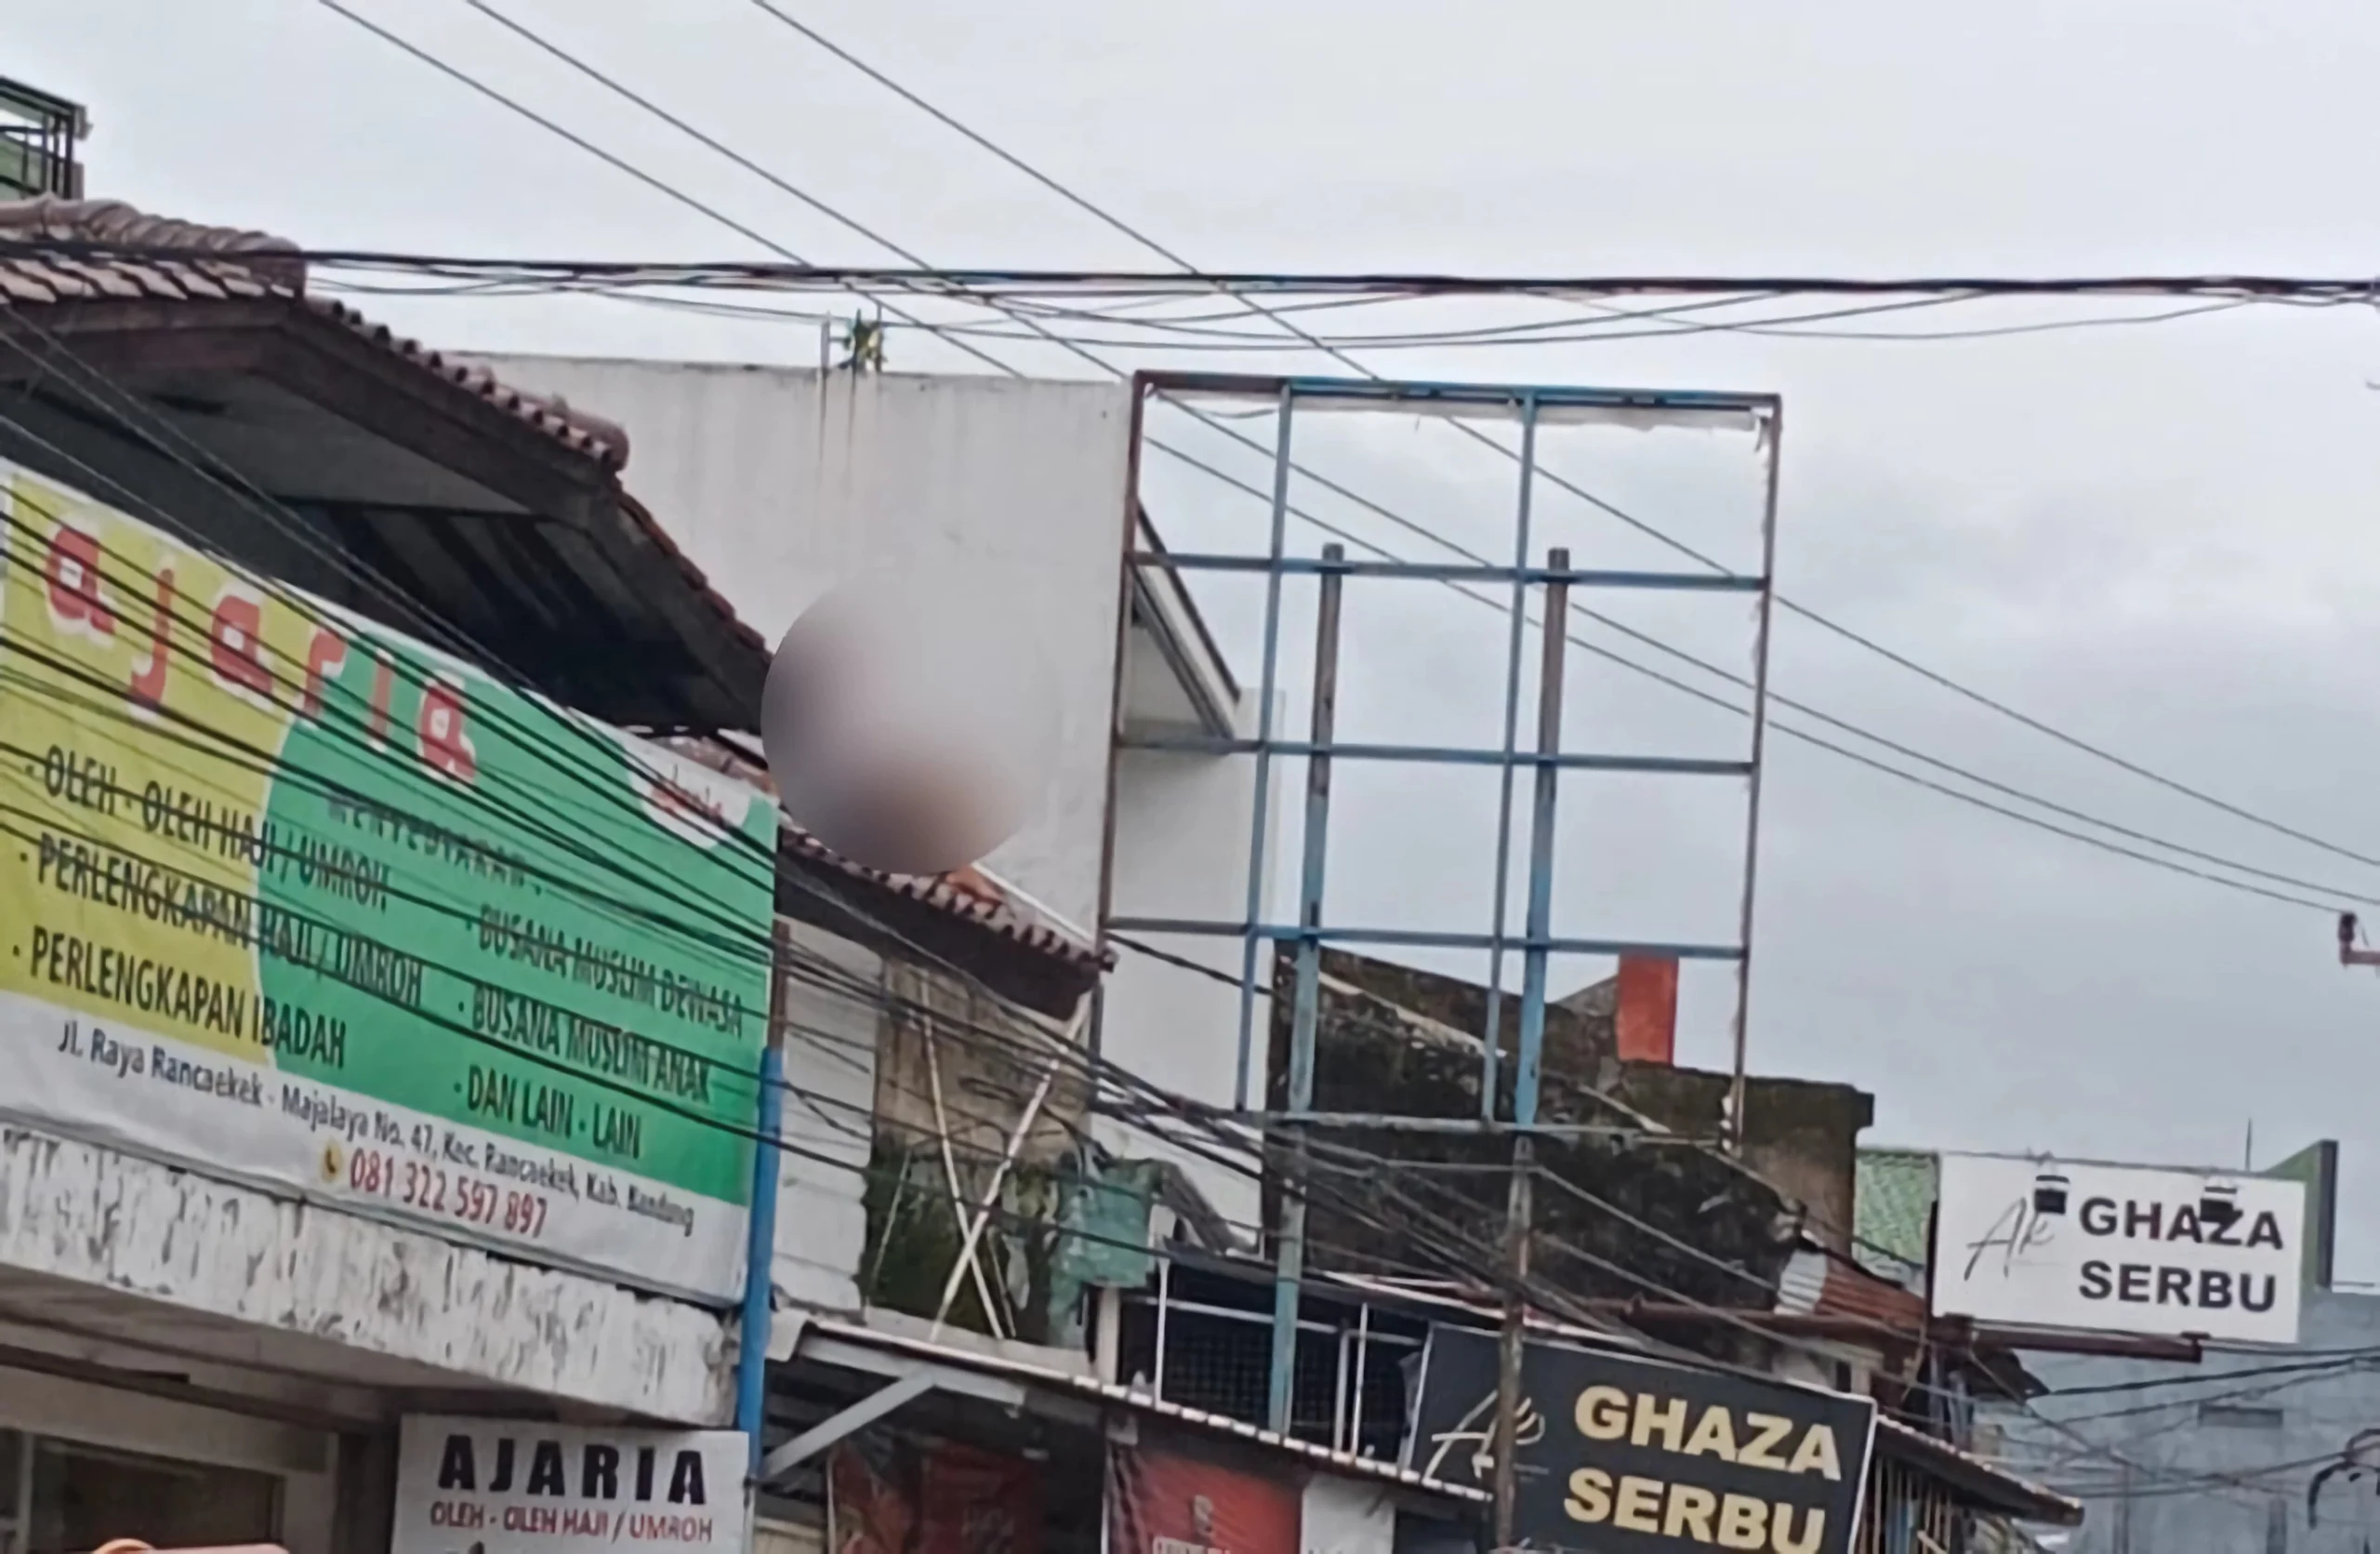 Seorang pria menjadi korban tersengat aliran listrik dari kabel PLN yang tidak terbungkus di area Jalan Raya Rancaekek-Majalaya, wilayah Desa Bojongloa, Kecamatan Rancaekek, Kabupaten Bandung.